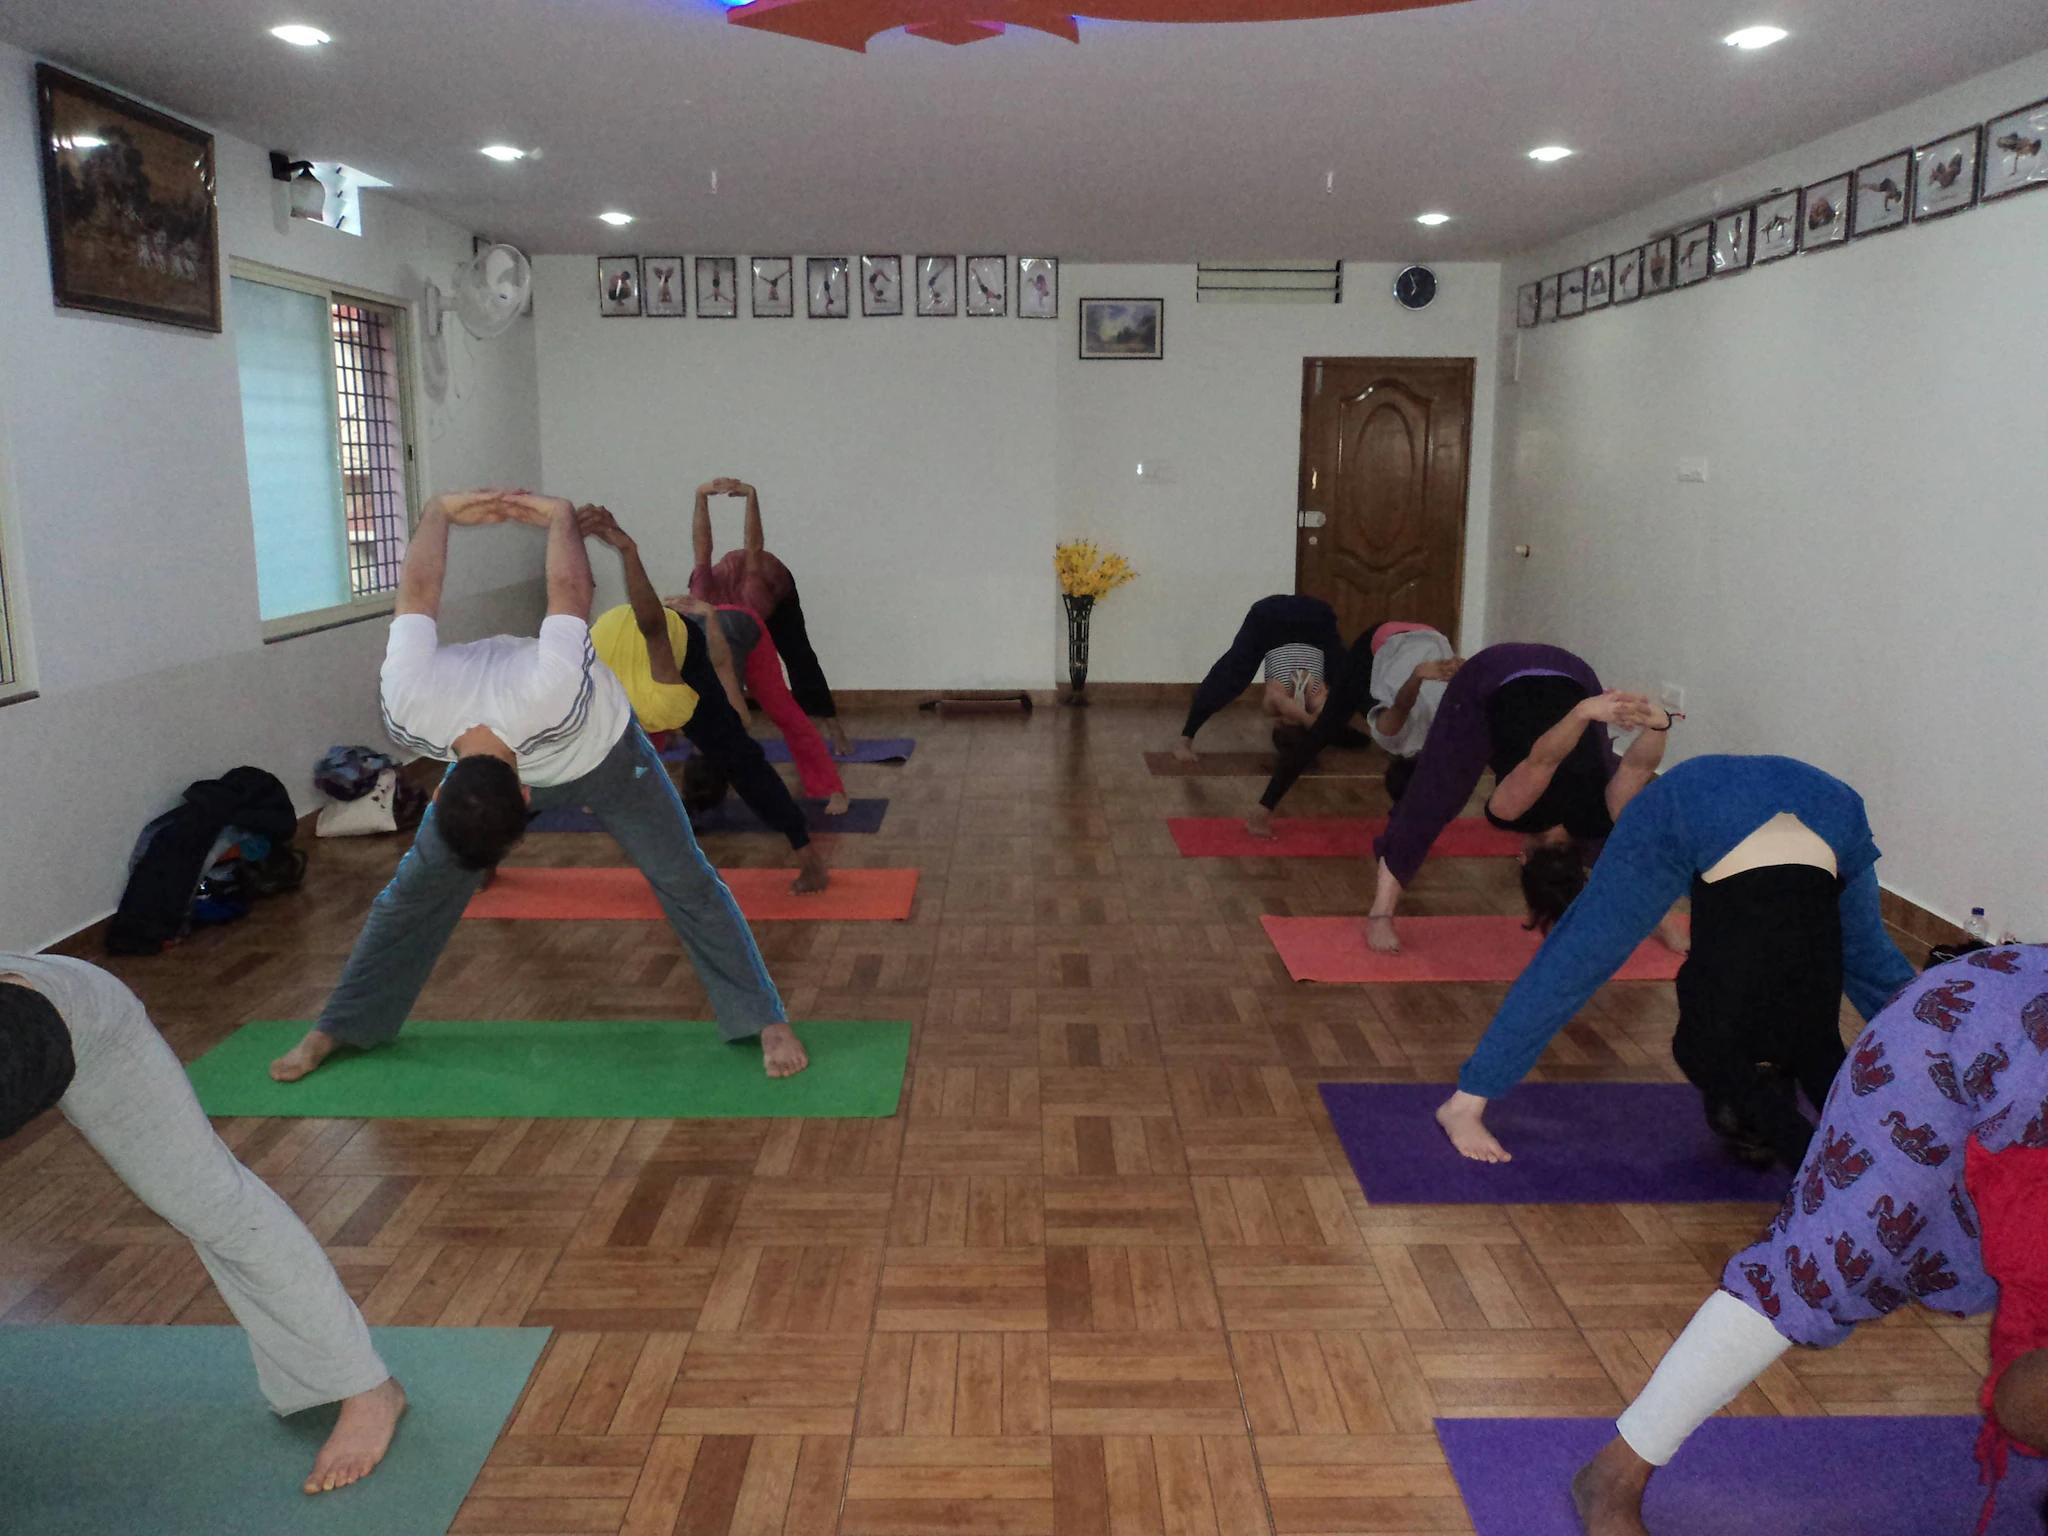 mysore india yoga teacher training - Who was the yoga guru in Mysore